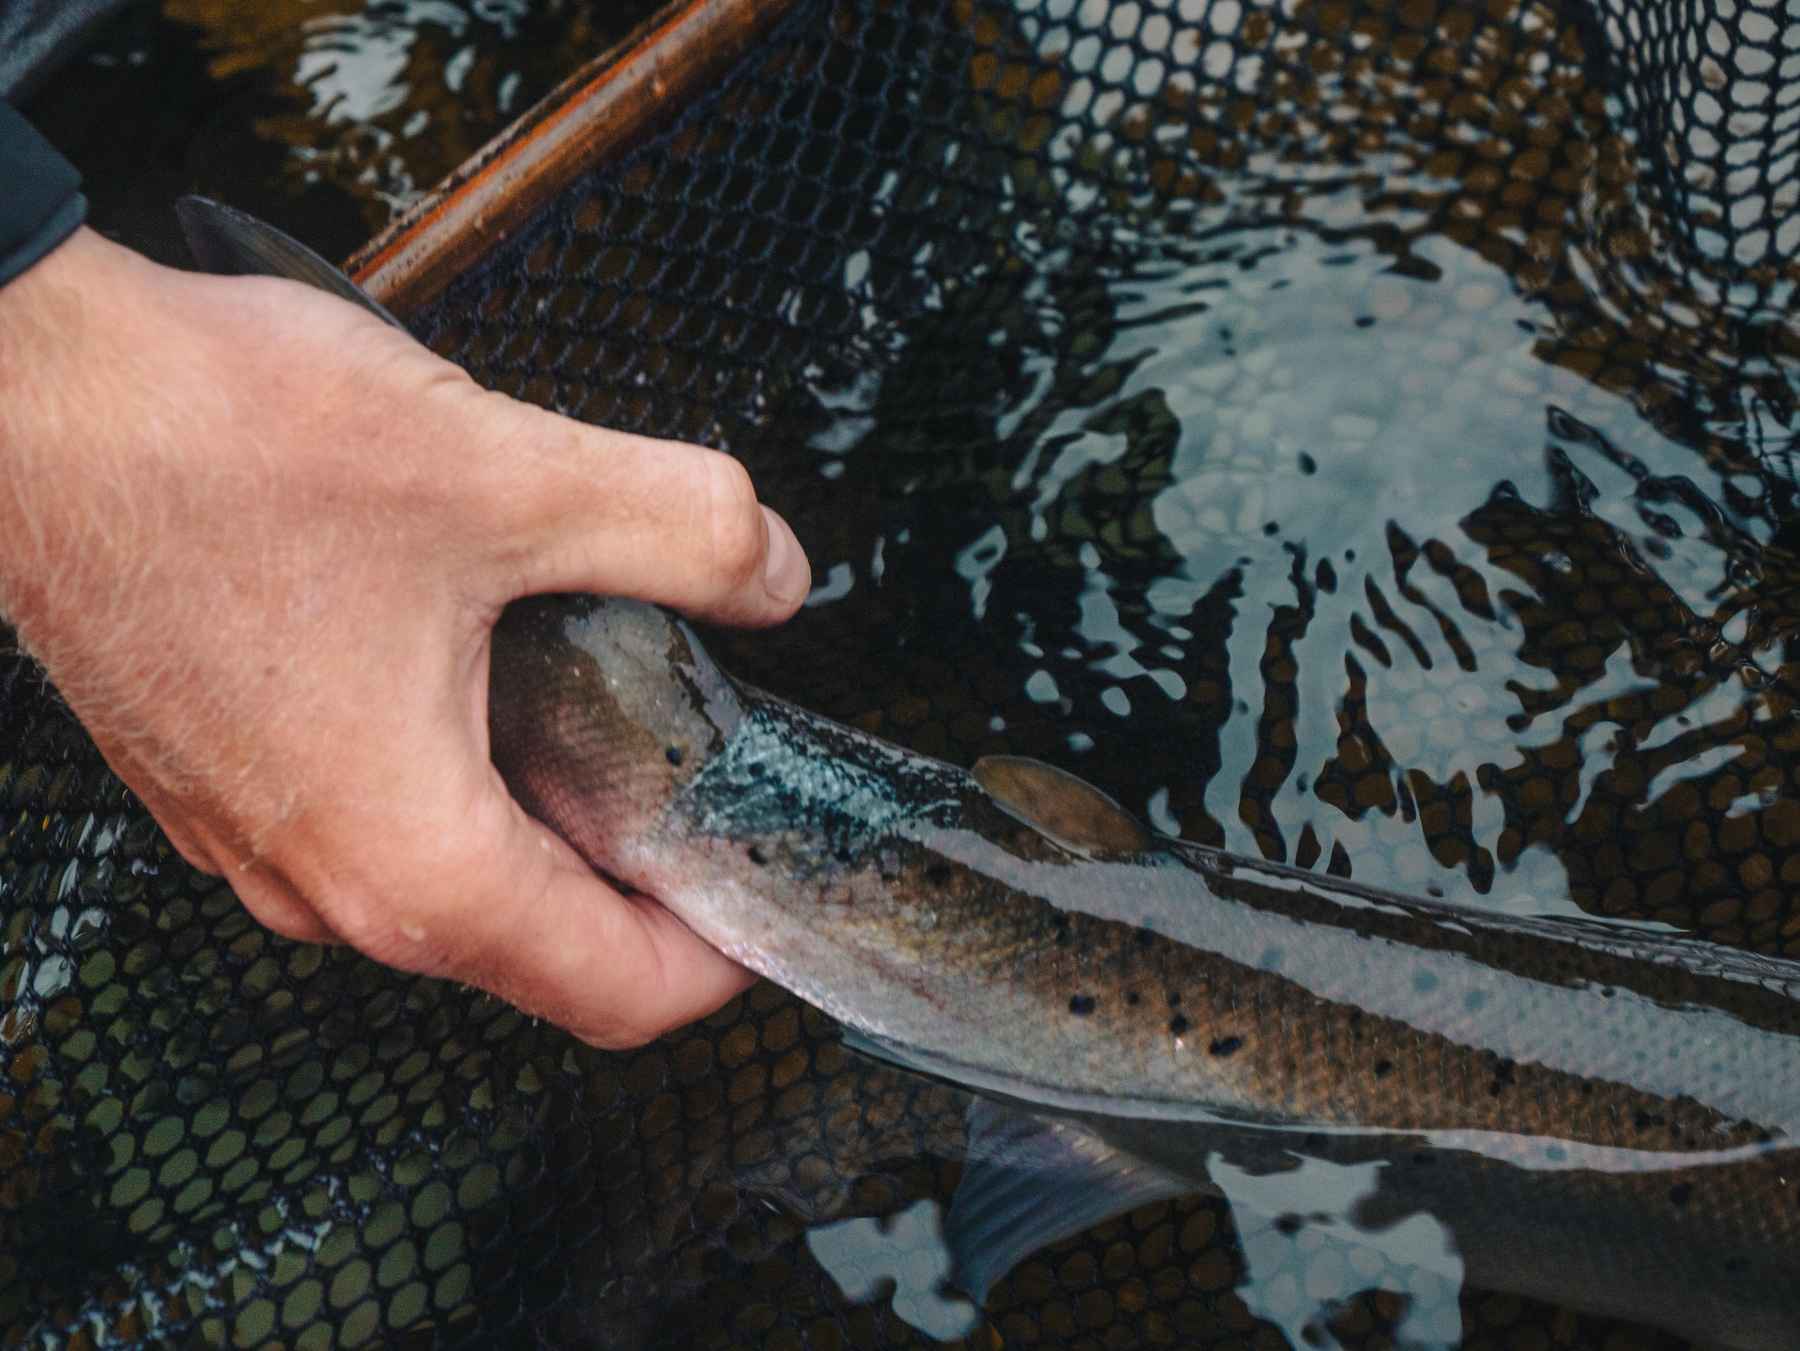 Scientists 'refrigerated' a Nova Scotia salmon stream